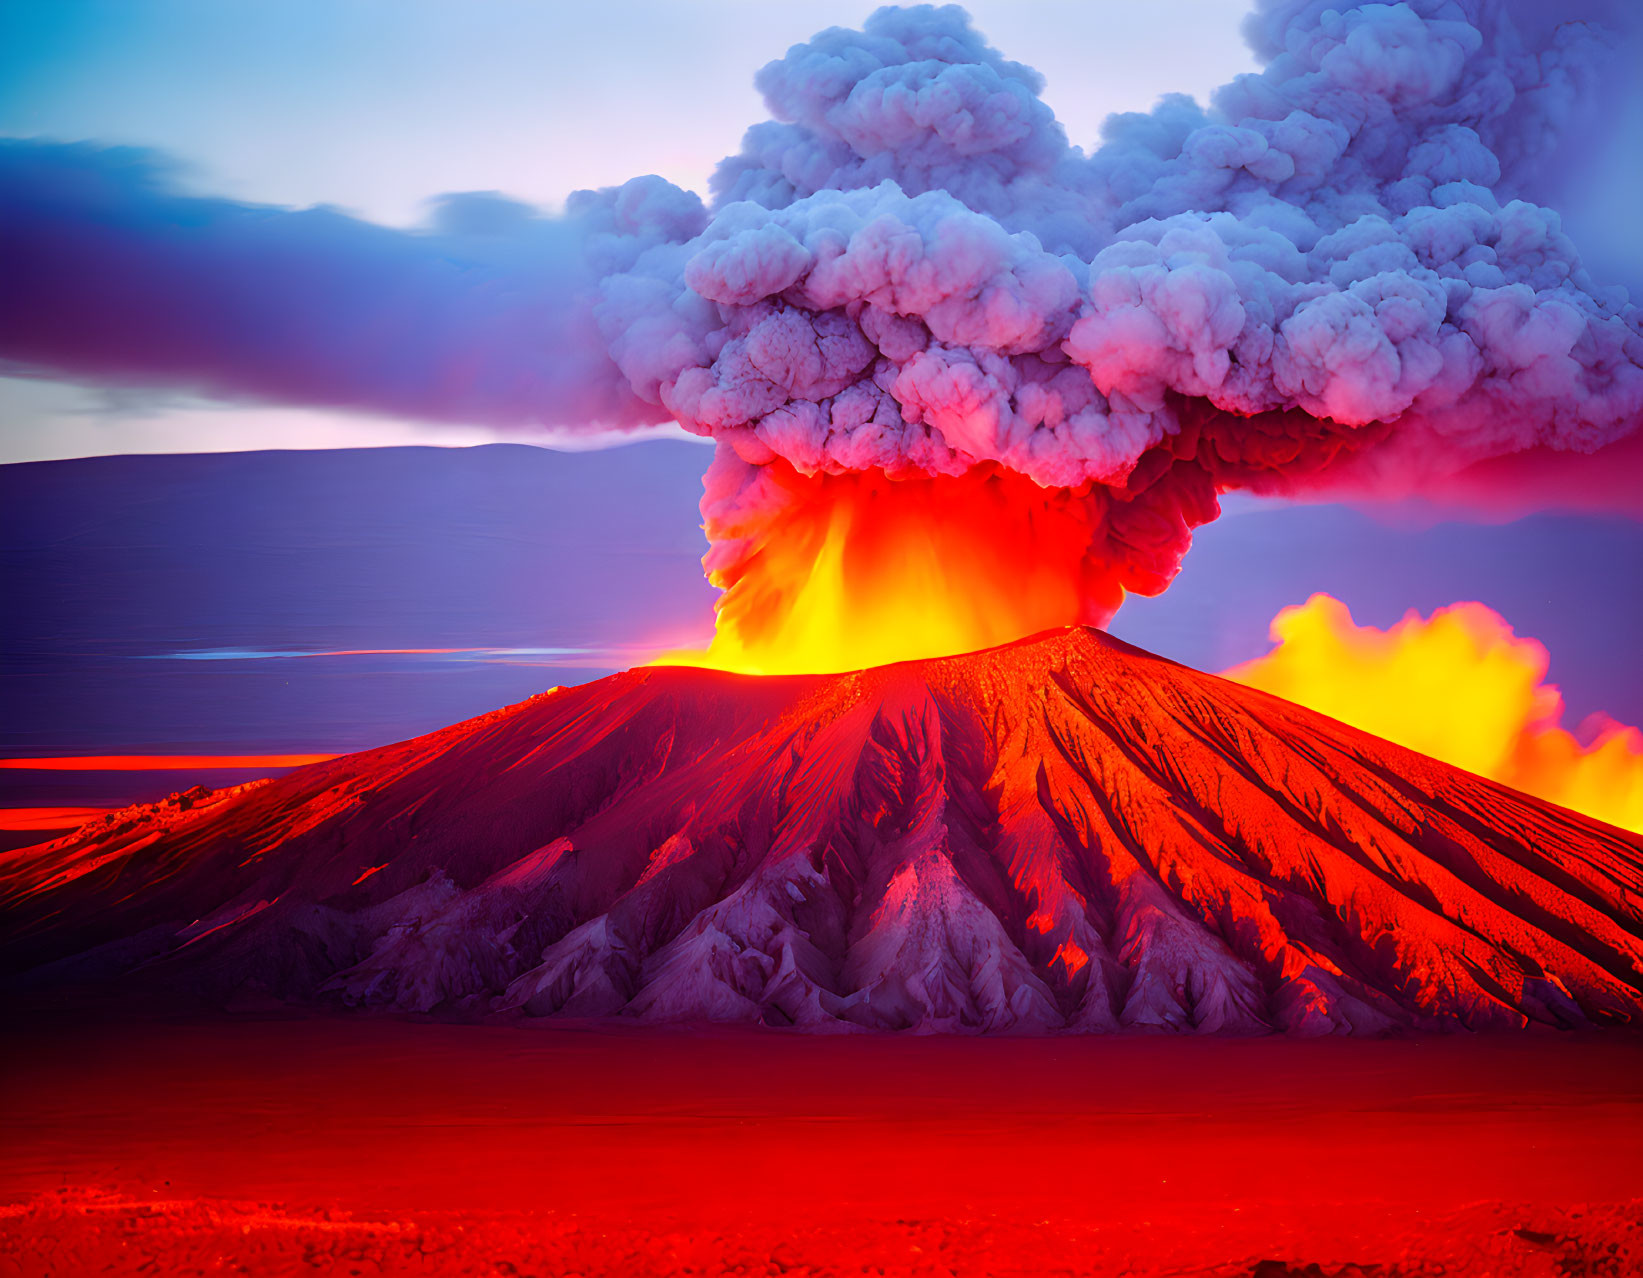 volcanic eruption on a tropical island